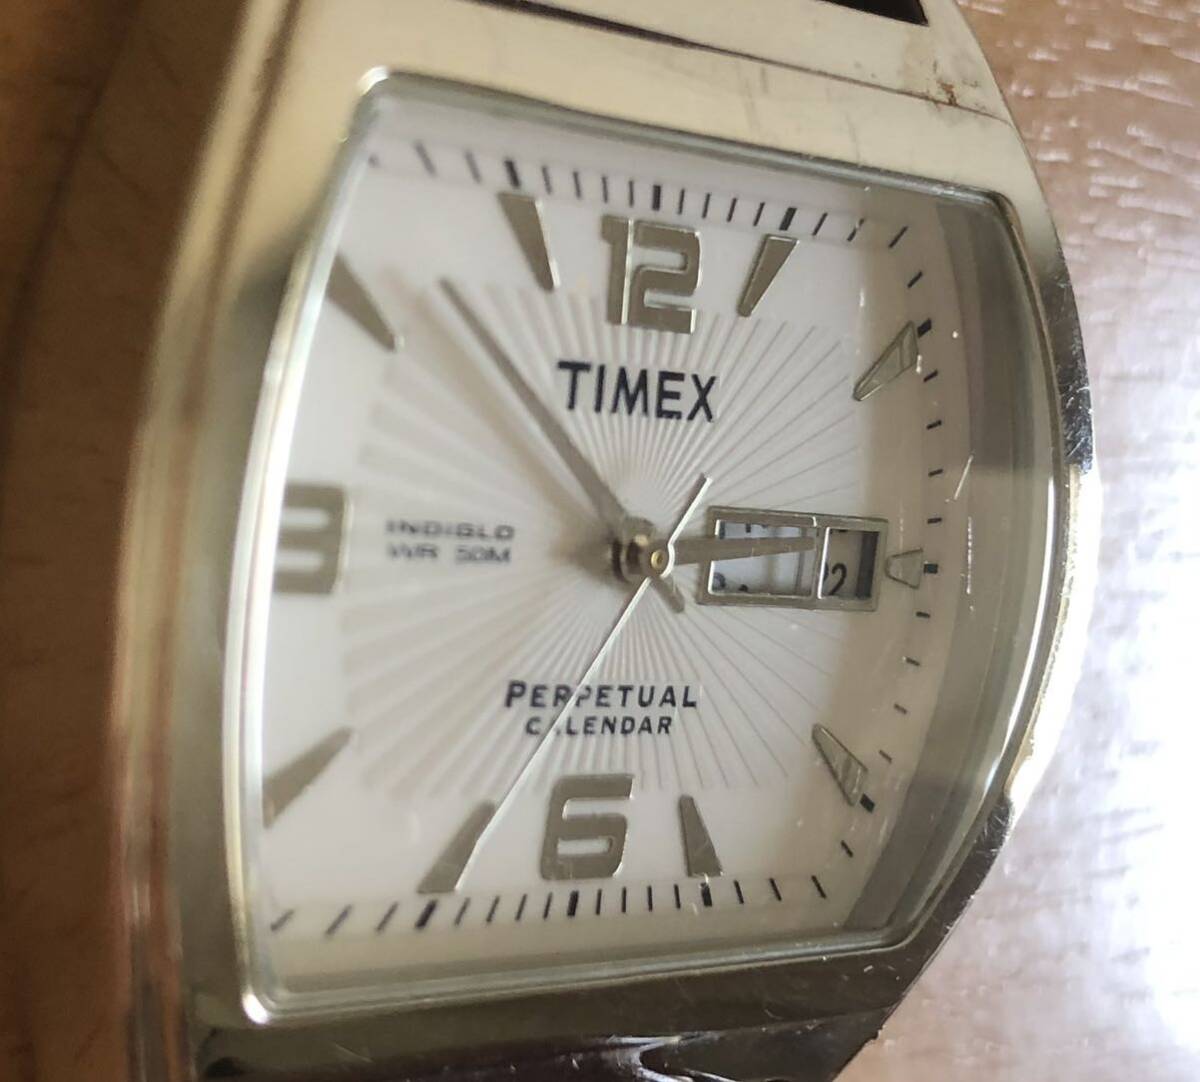 289-0708 TIMEX Timex мужские наручные часы кожа ремень кварц Perpetual календарь MM разряженная батарея работоспособность не проверялась 